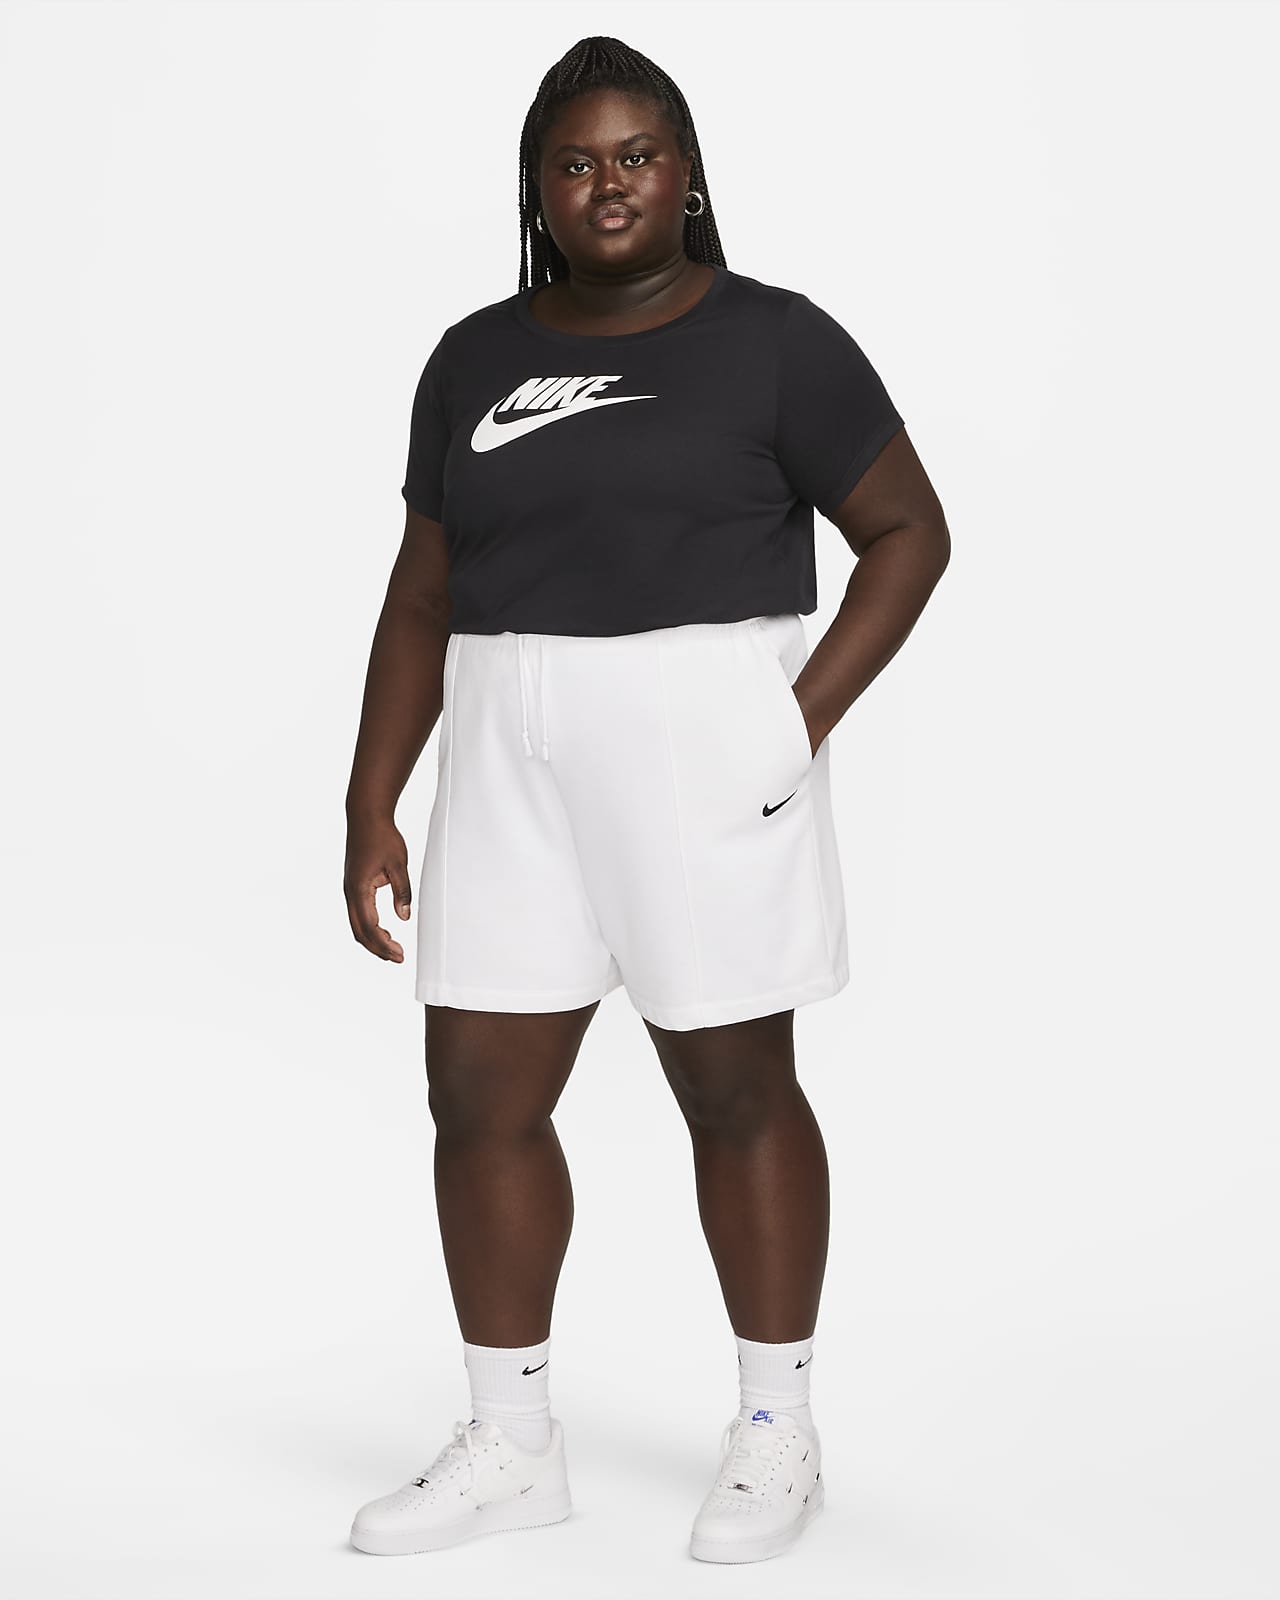 Nike Women's Sportswear Essential Logo T-Shirt, Plus Size 1X